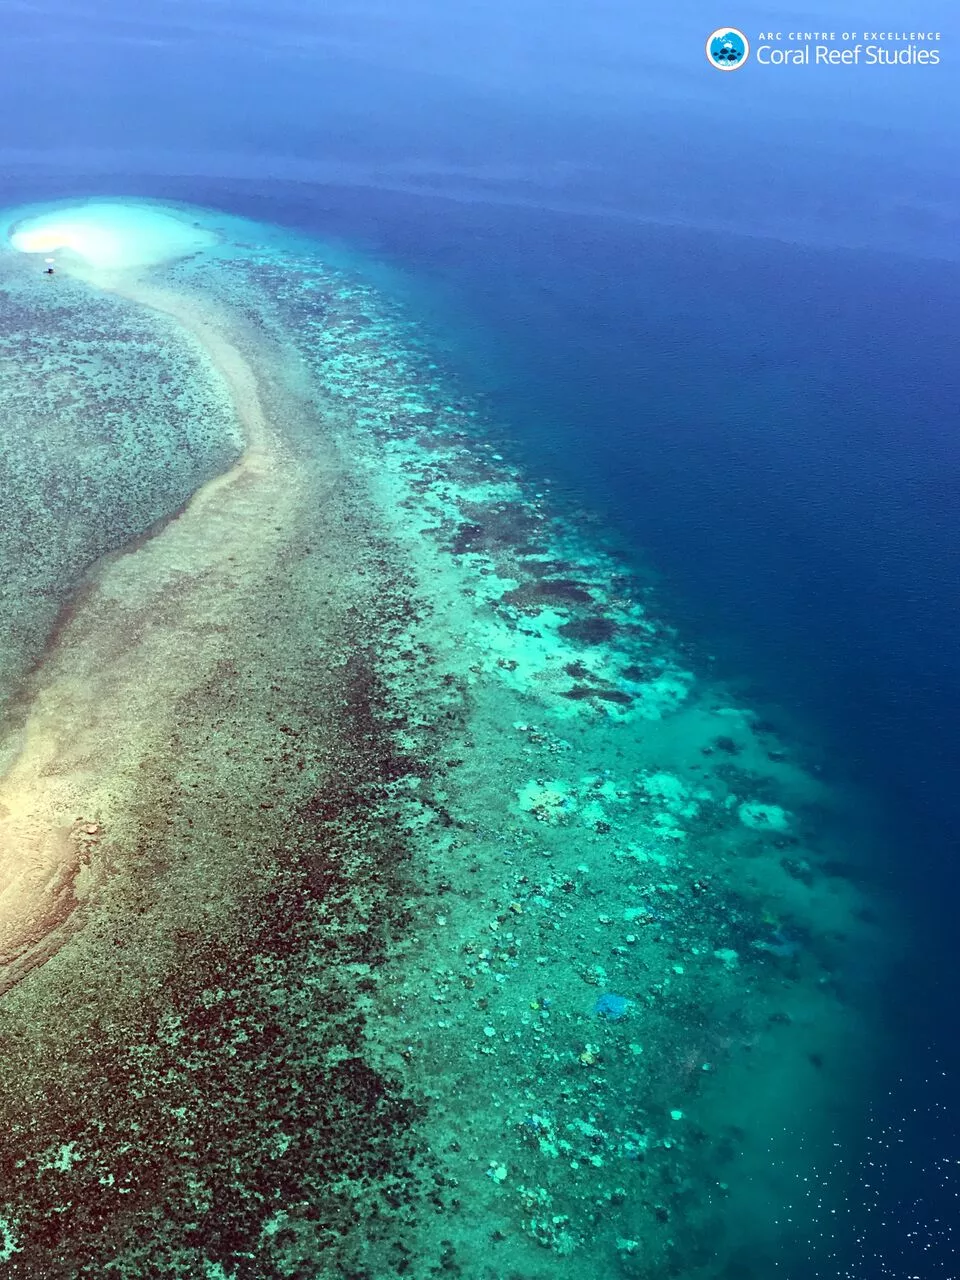 Image of coral reef in the ocean